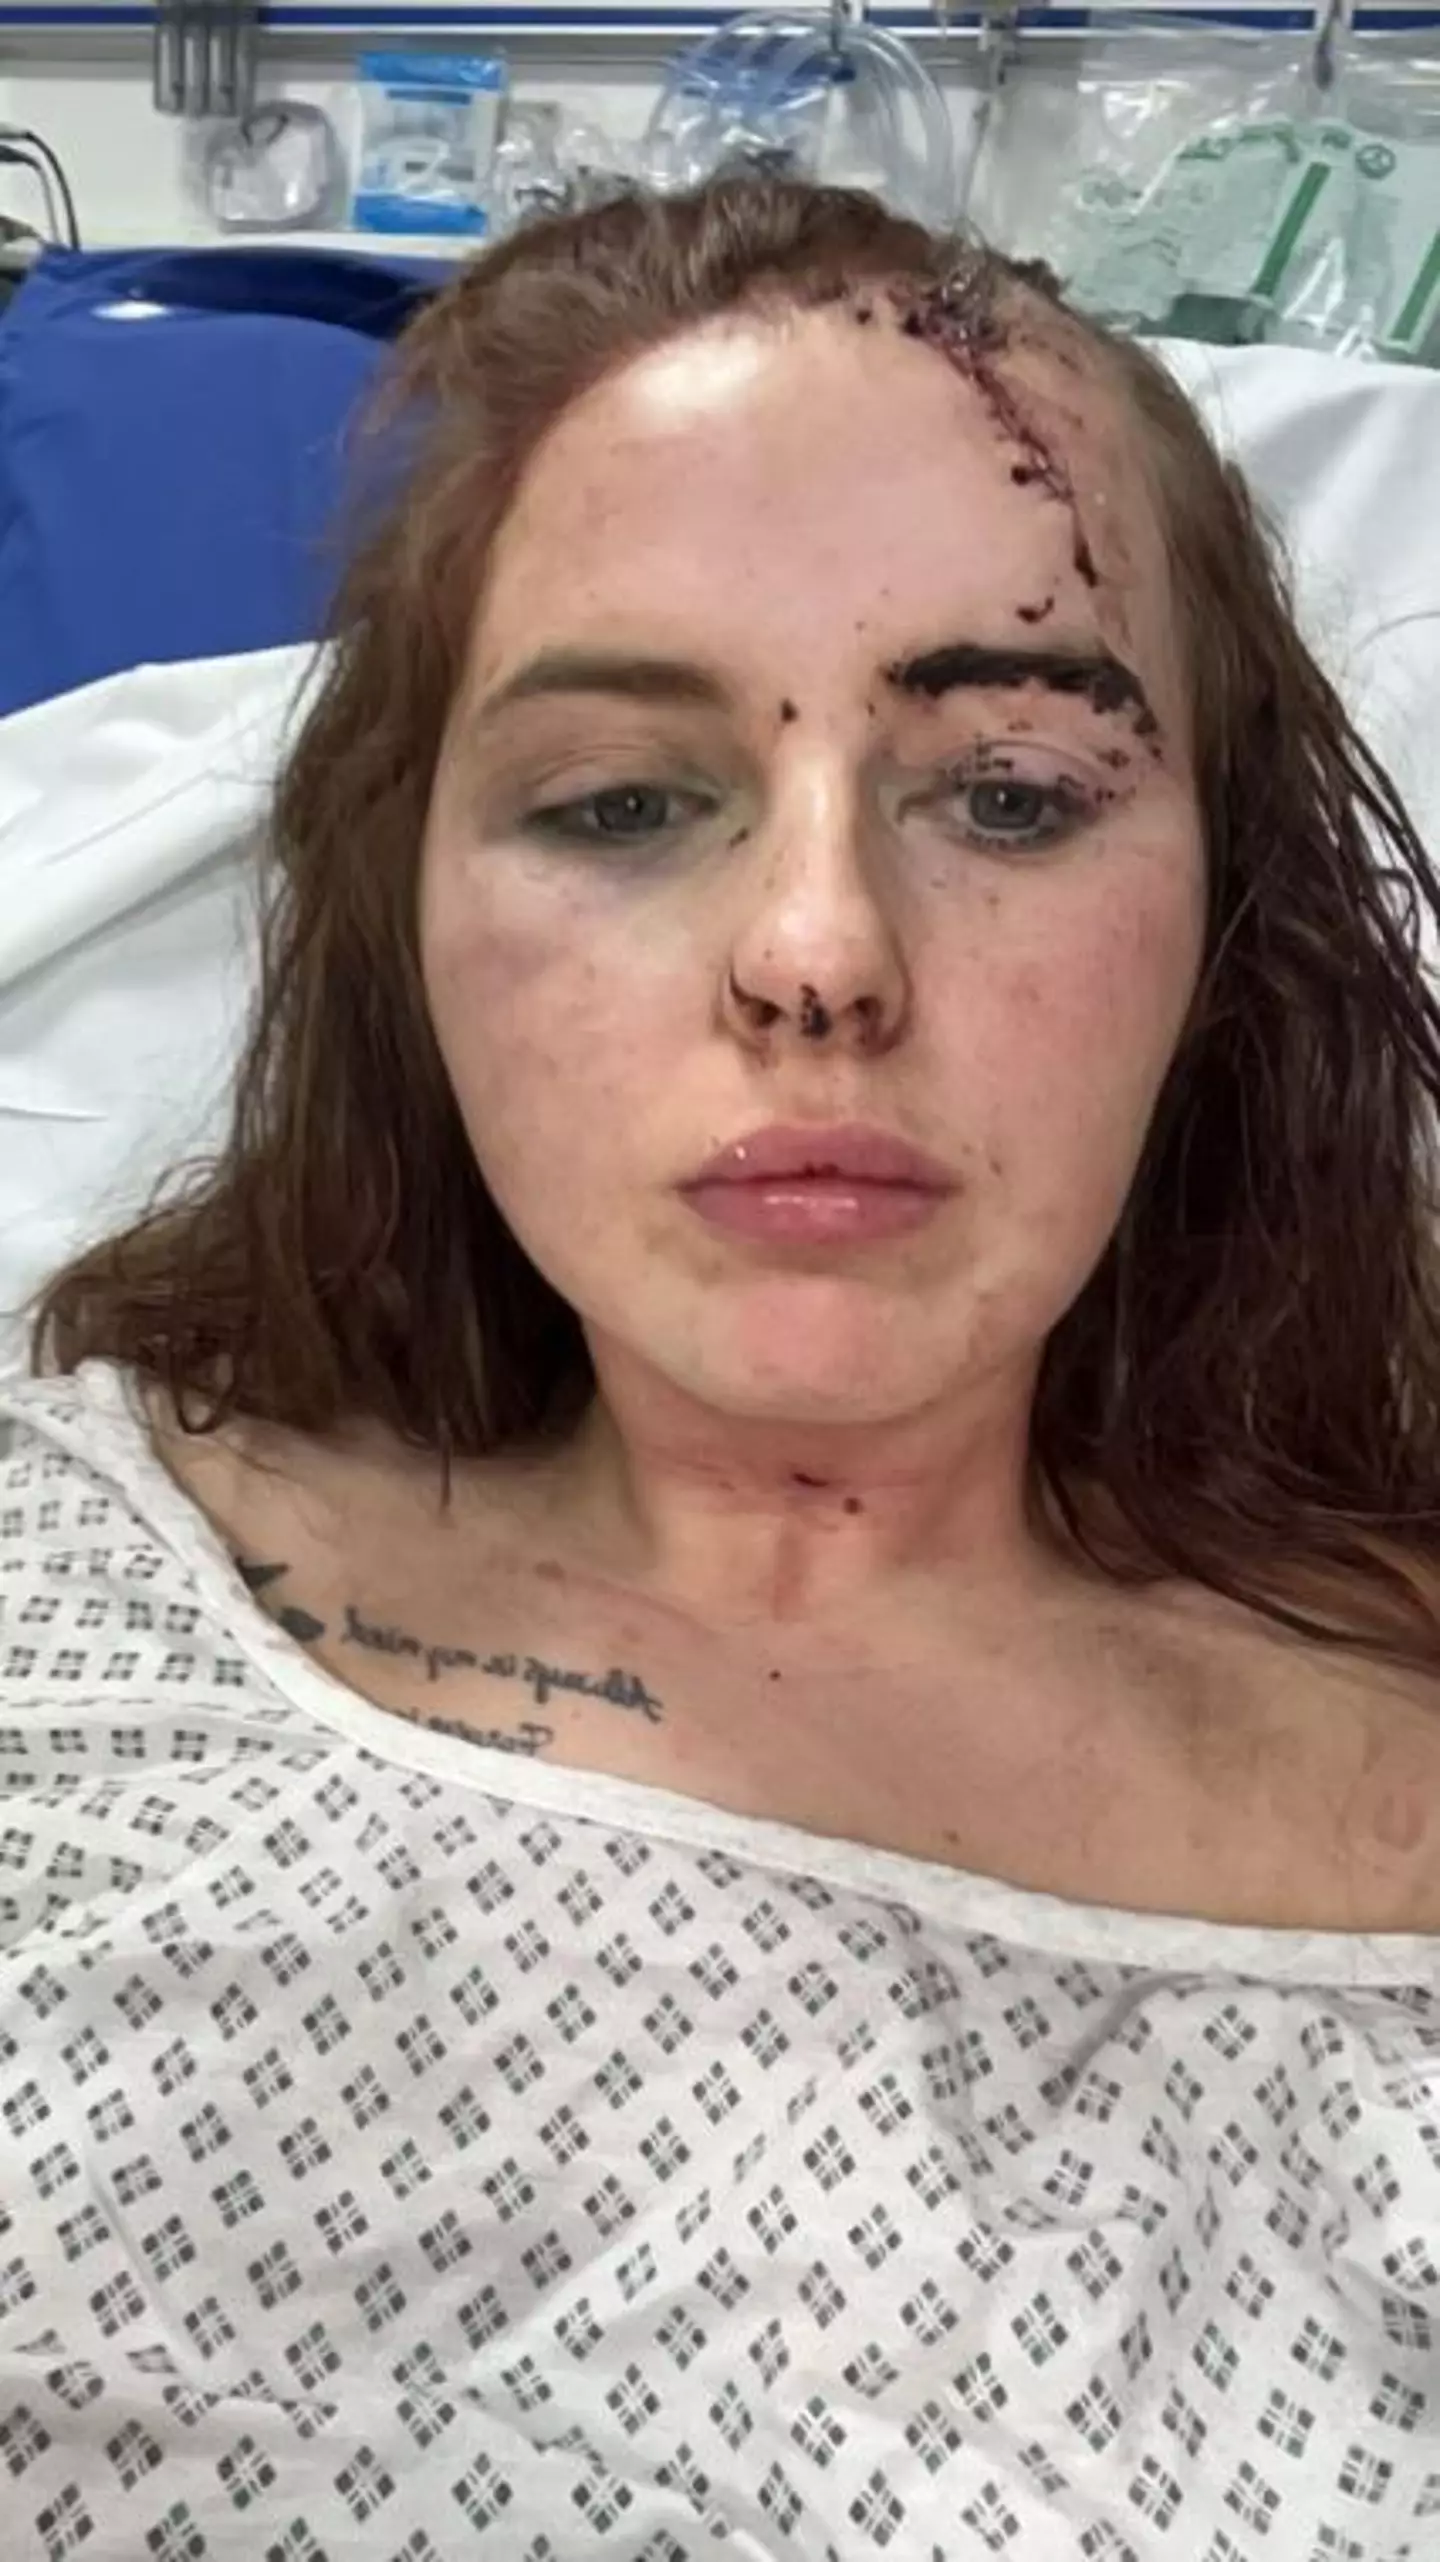 Emily Lewis woke up in hospital with horrific injuries last February (WalesOnline/Media Wales)